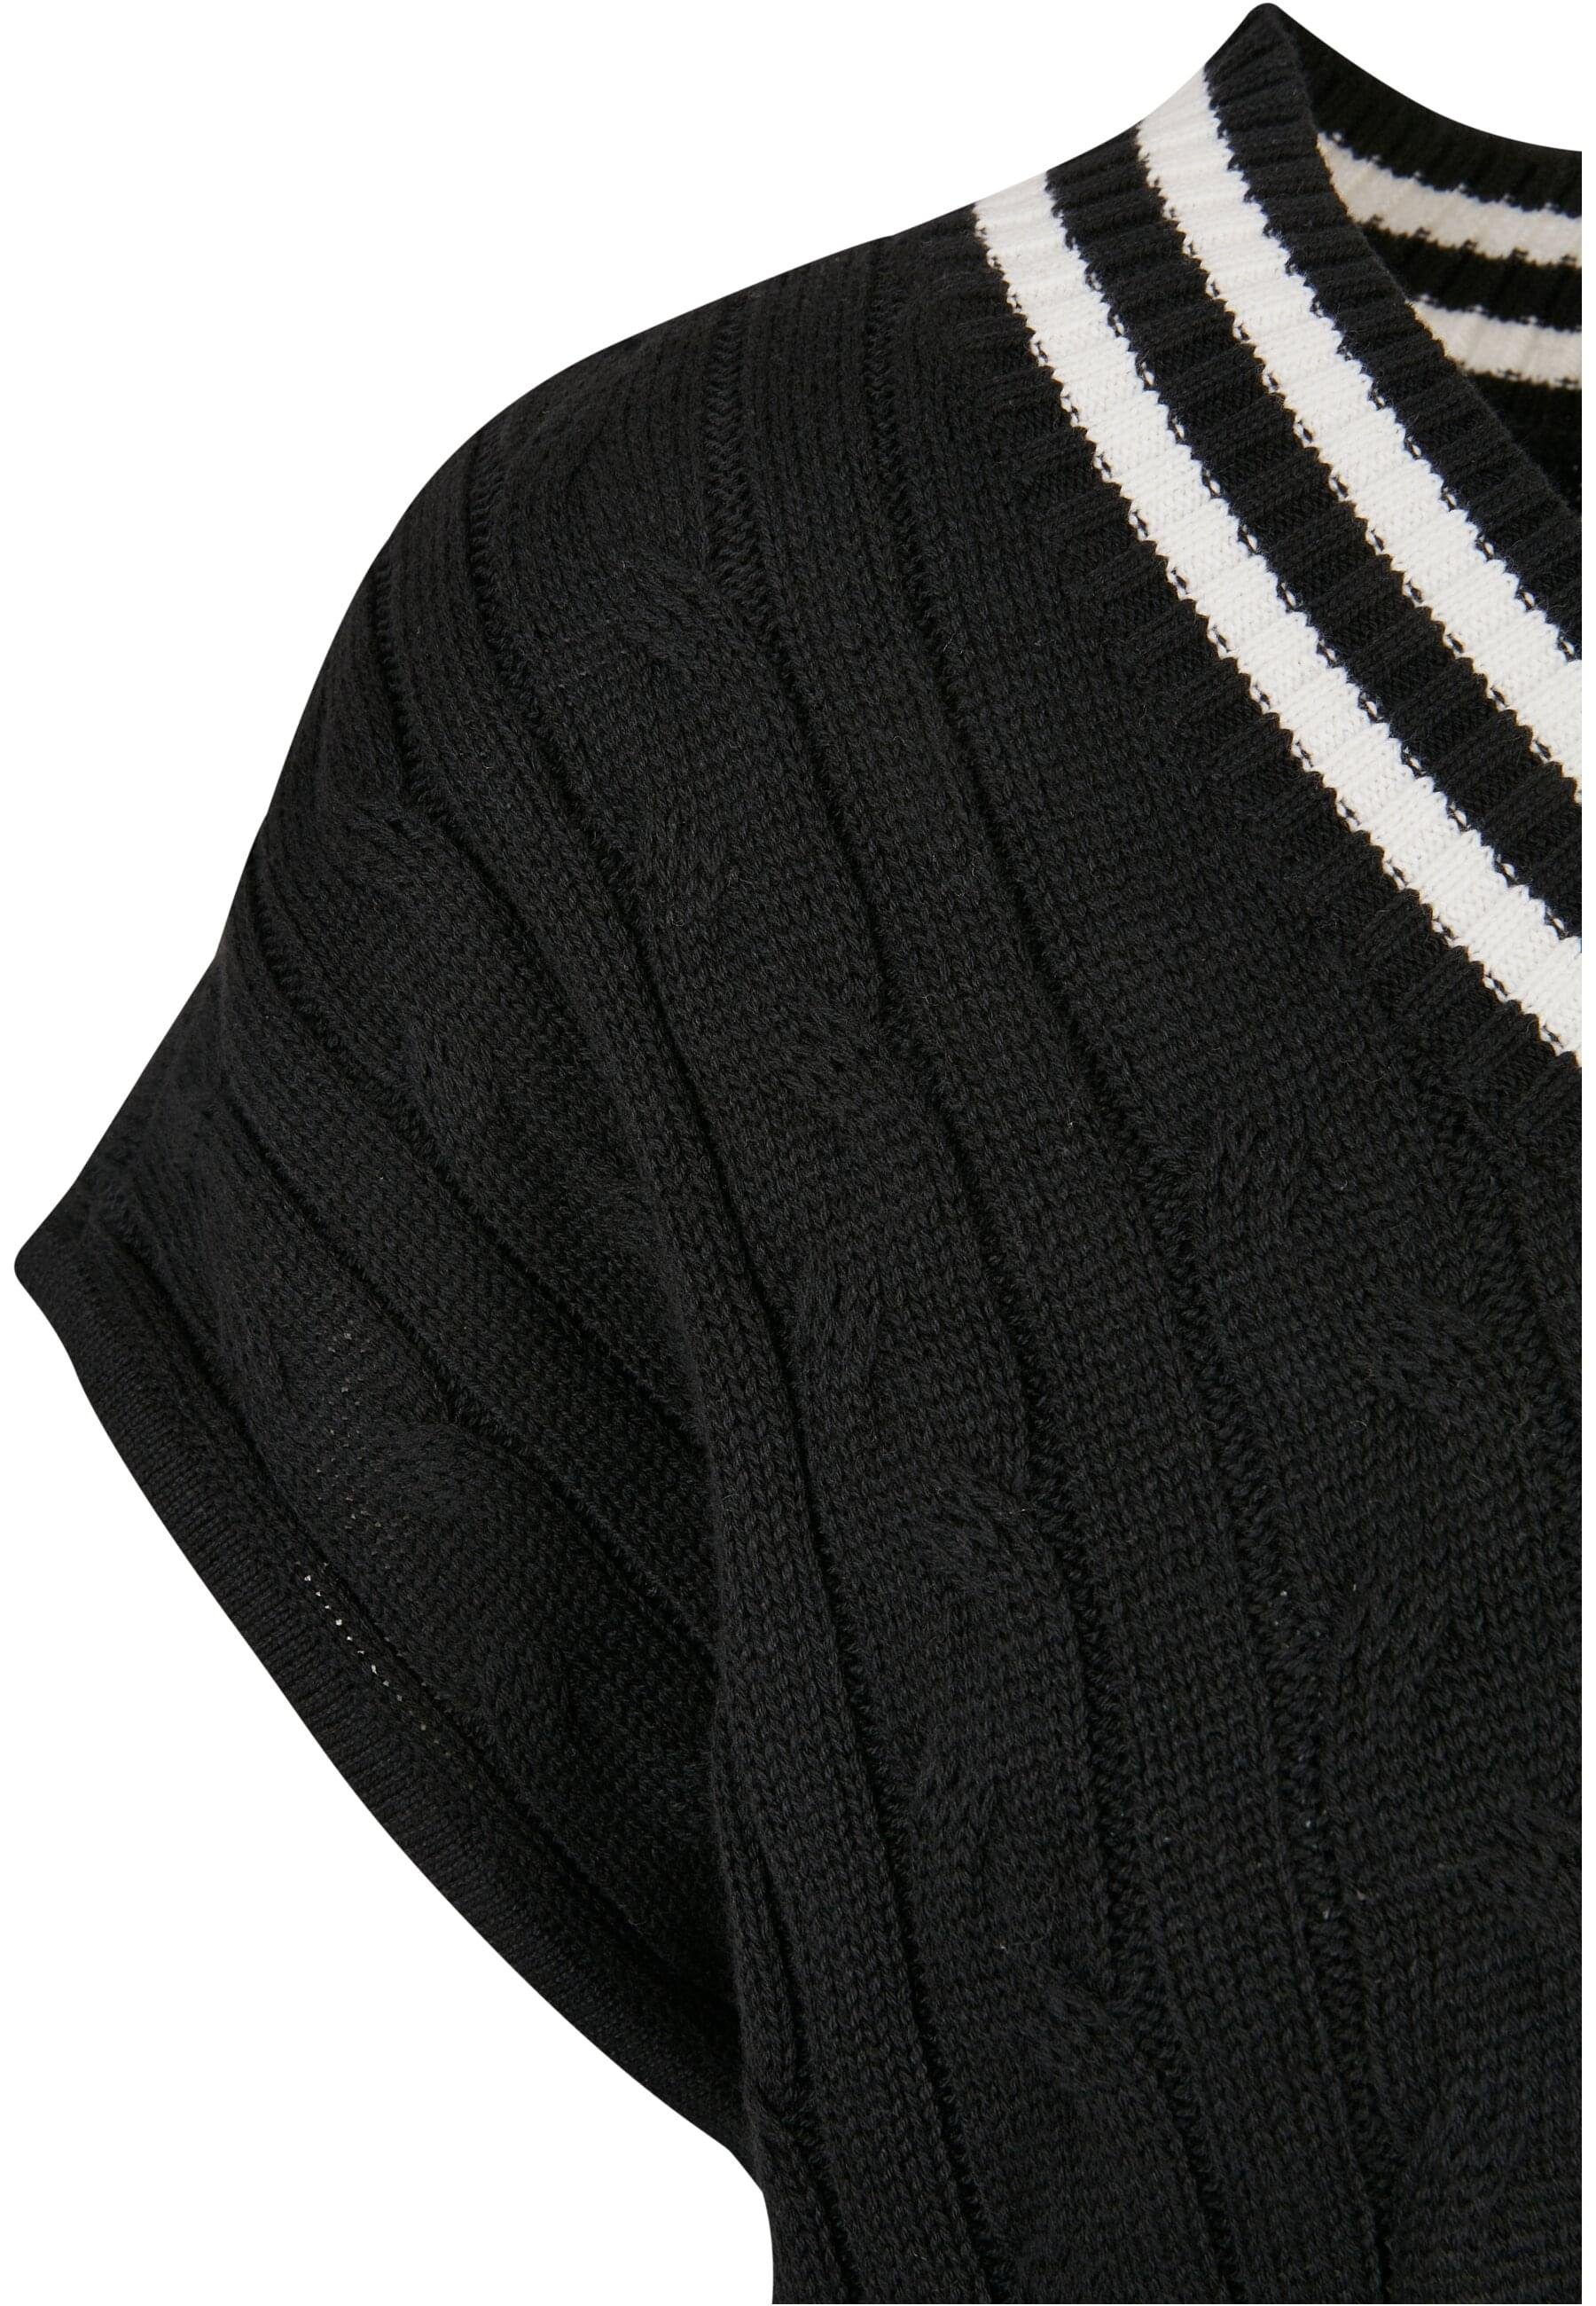 CLASSICS College URBAN Ladies Cropped Slipover Damen black (1-tlg) Kapuzenpullover Knit